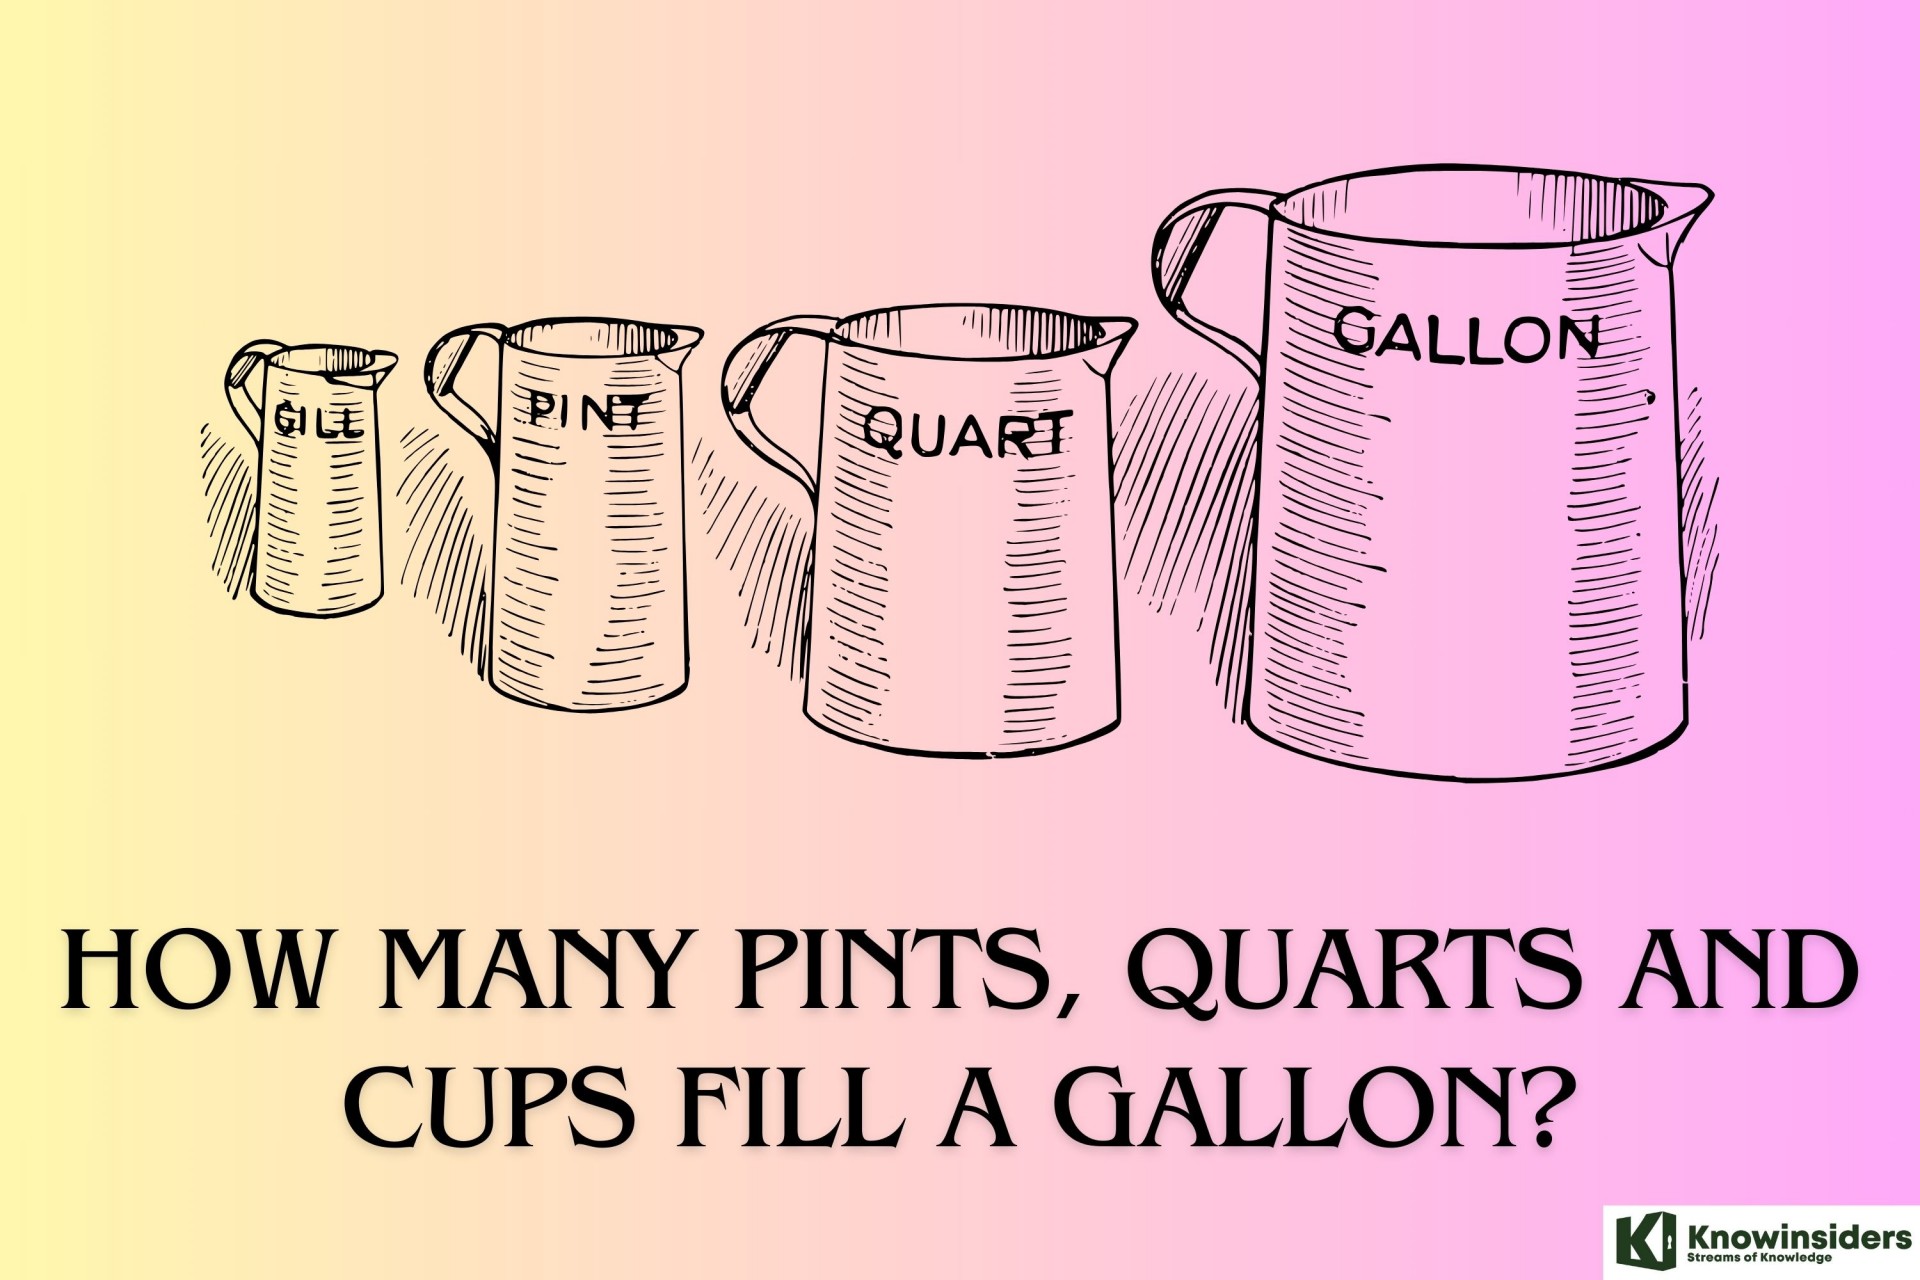 How Many Pints Fill a Gallon?